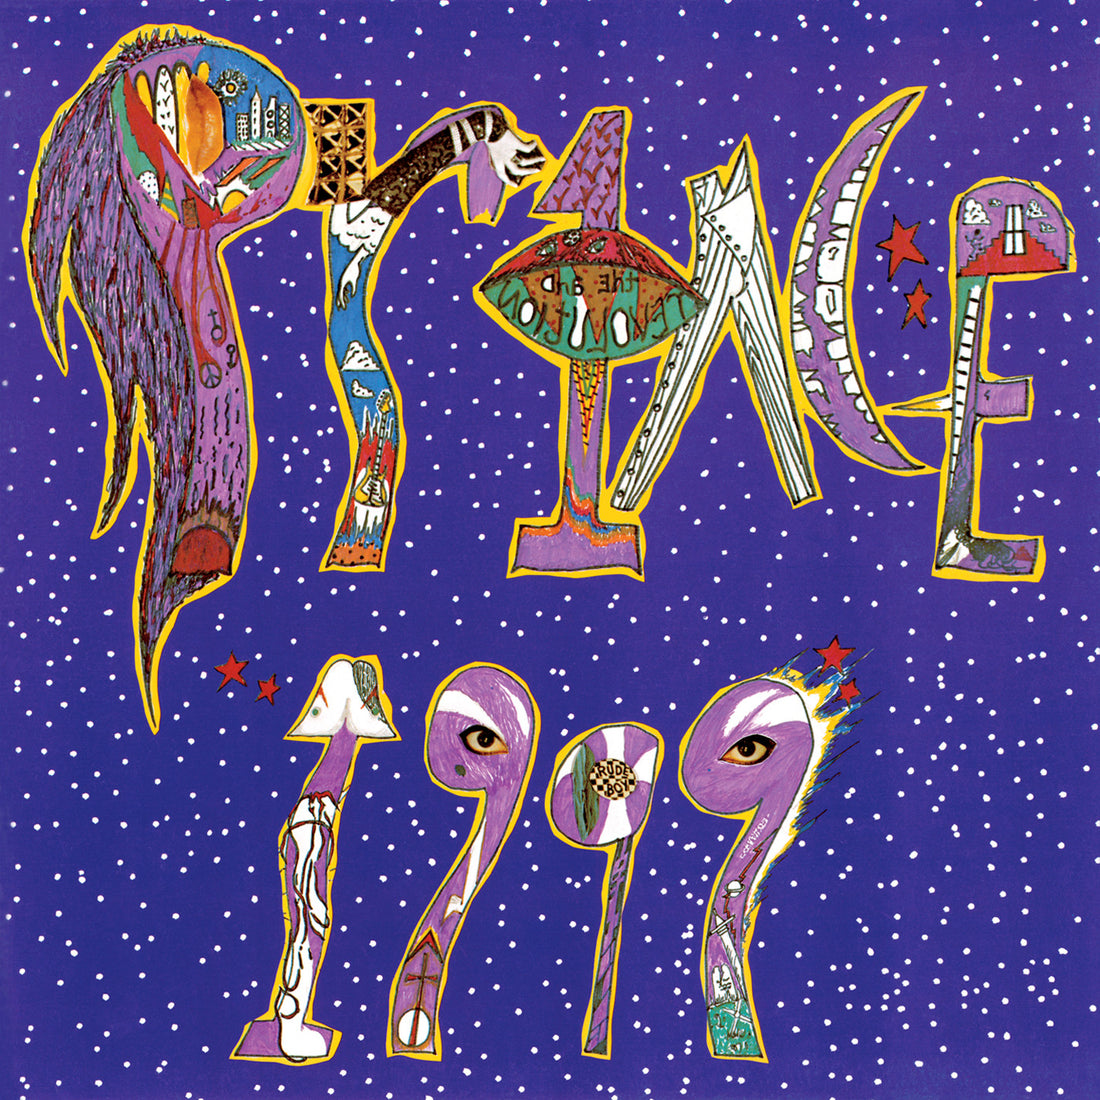 Prince "1999" 2xLP Vinyl